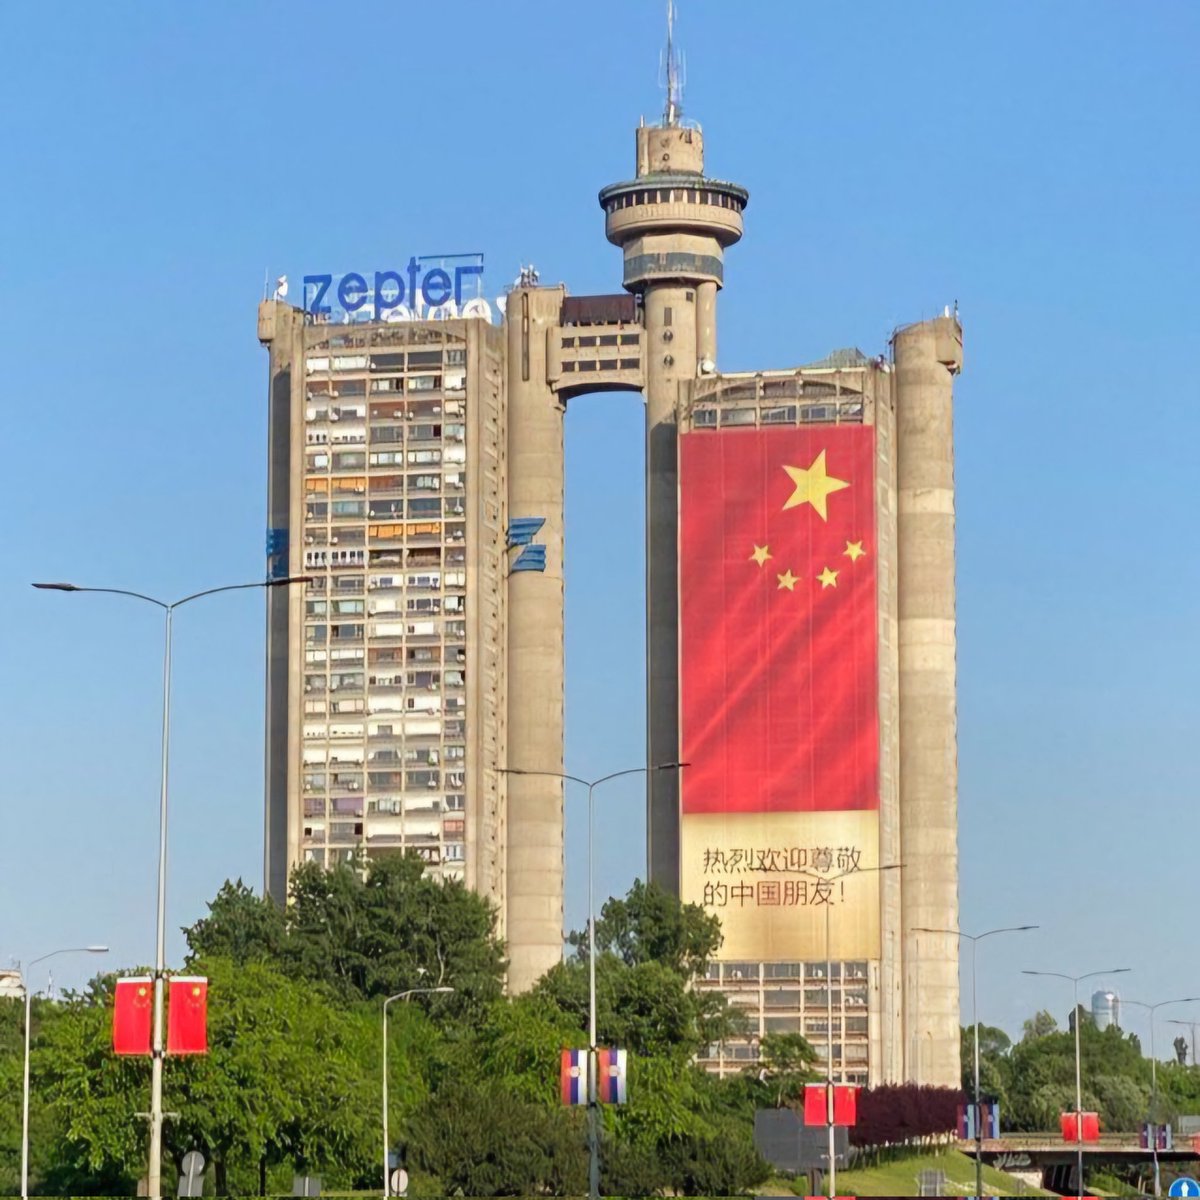 Chinese world trade center in Belgrade